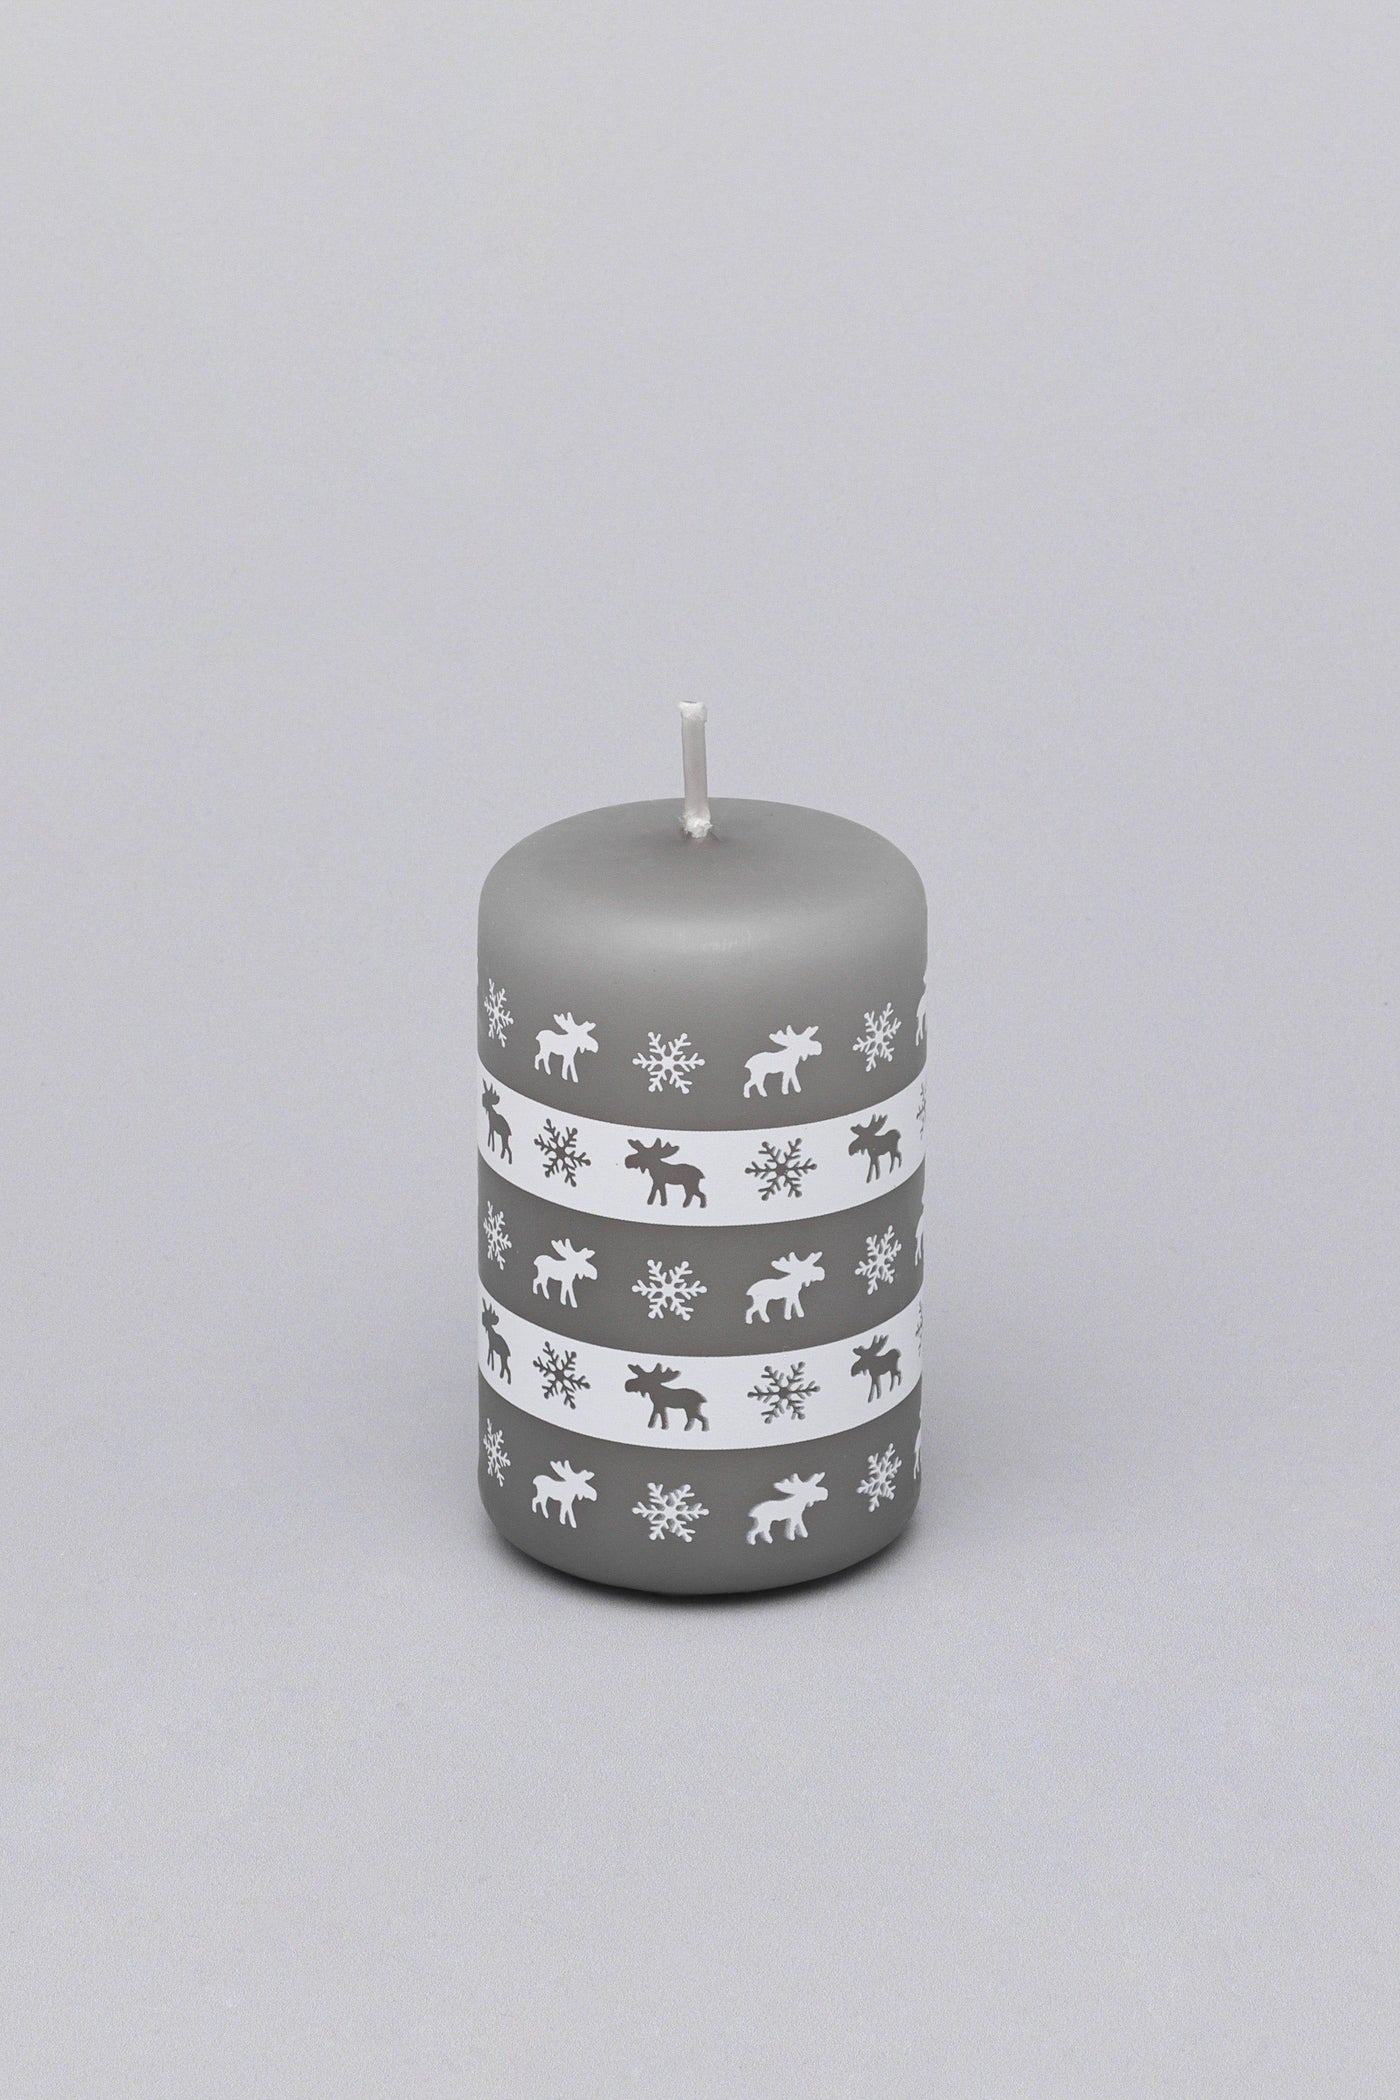 G Decor Candles Grey / Small Elk Snowflake Grey White Christmas Pillar Candle